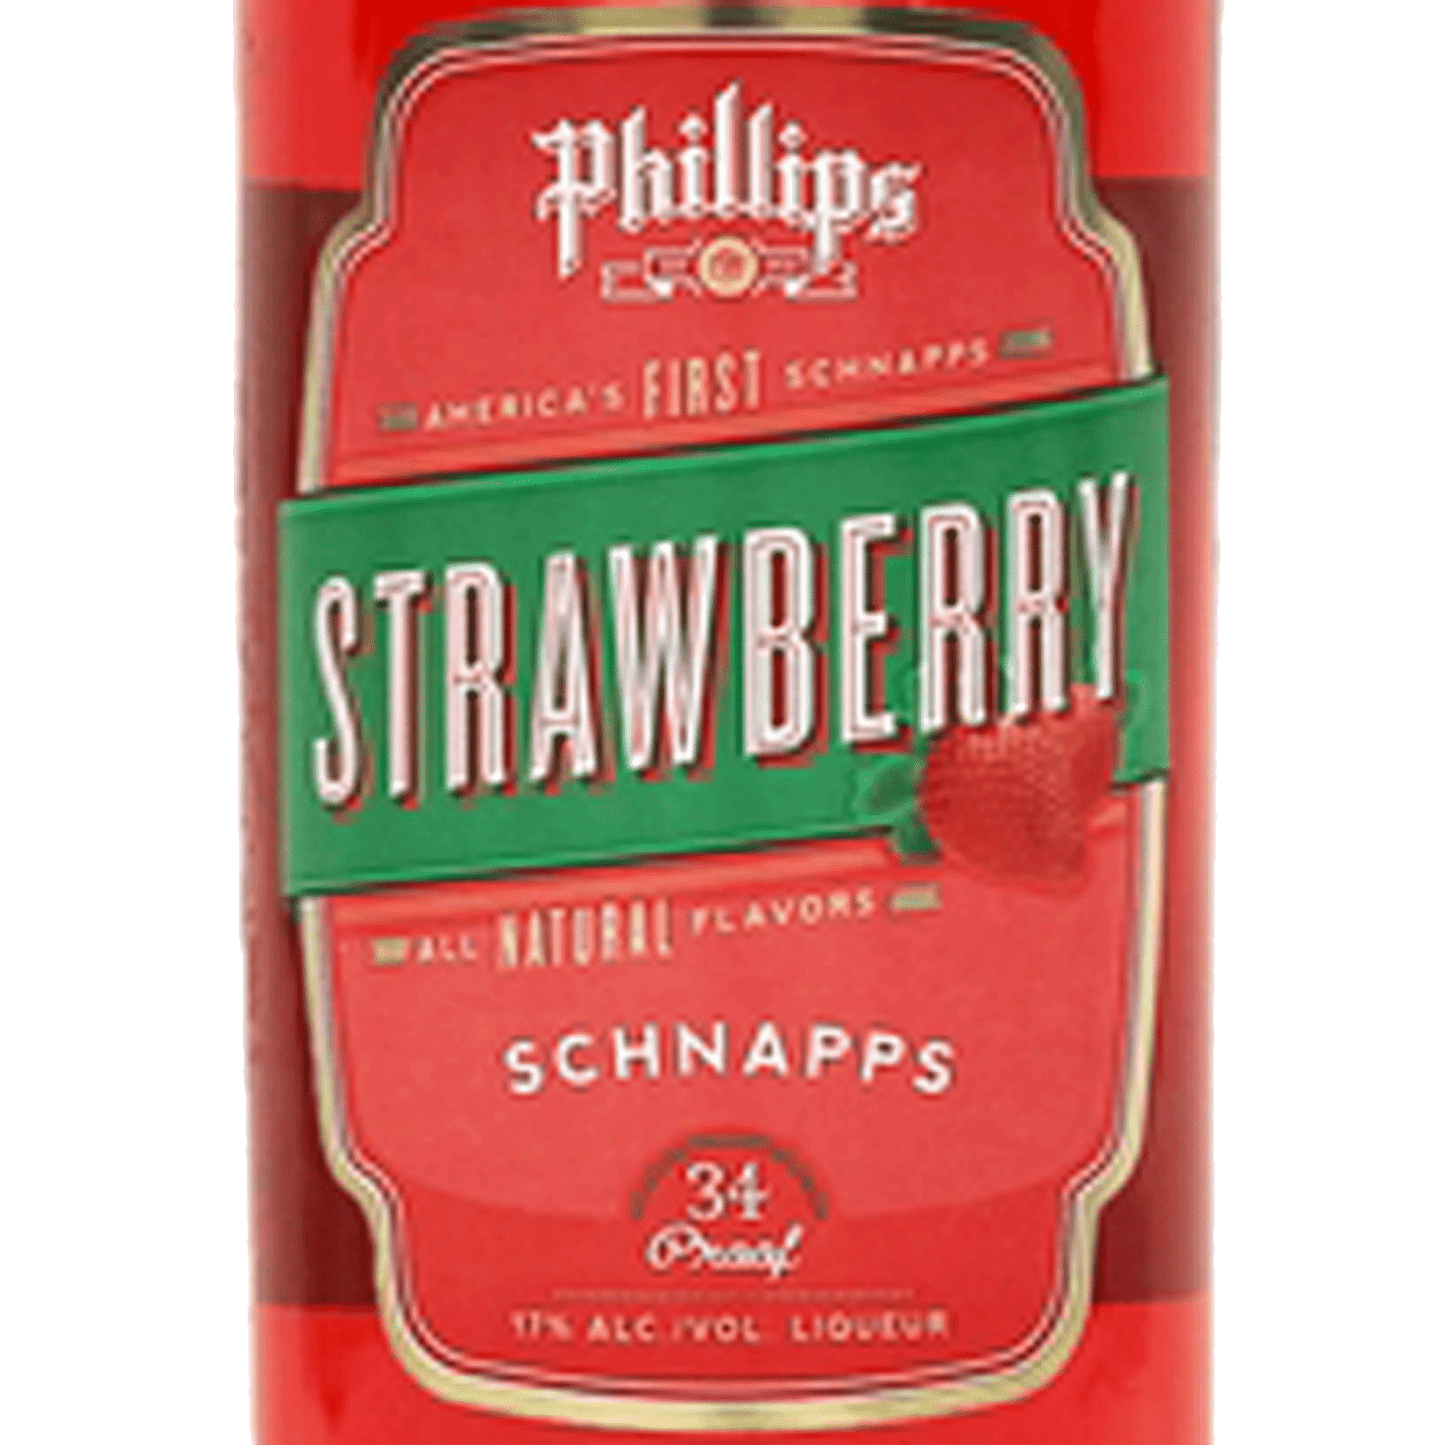 PHILLIPS STRAWBERRY SCHNAPPS